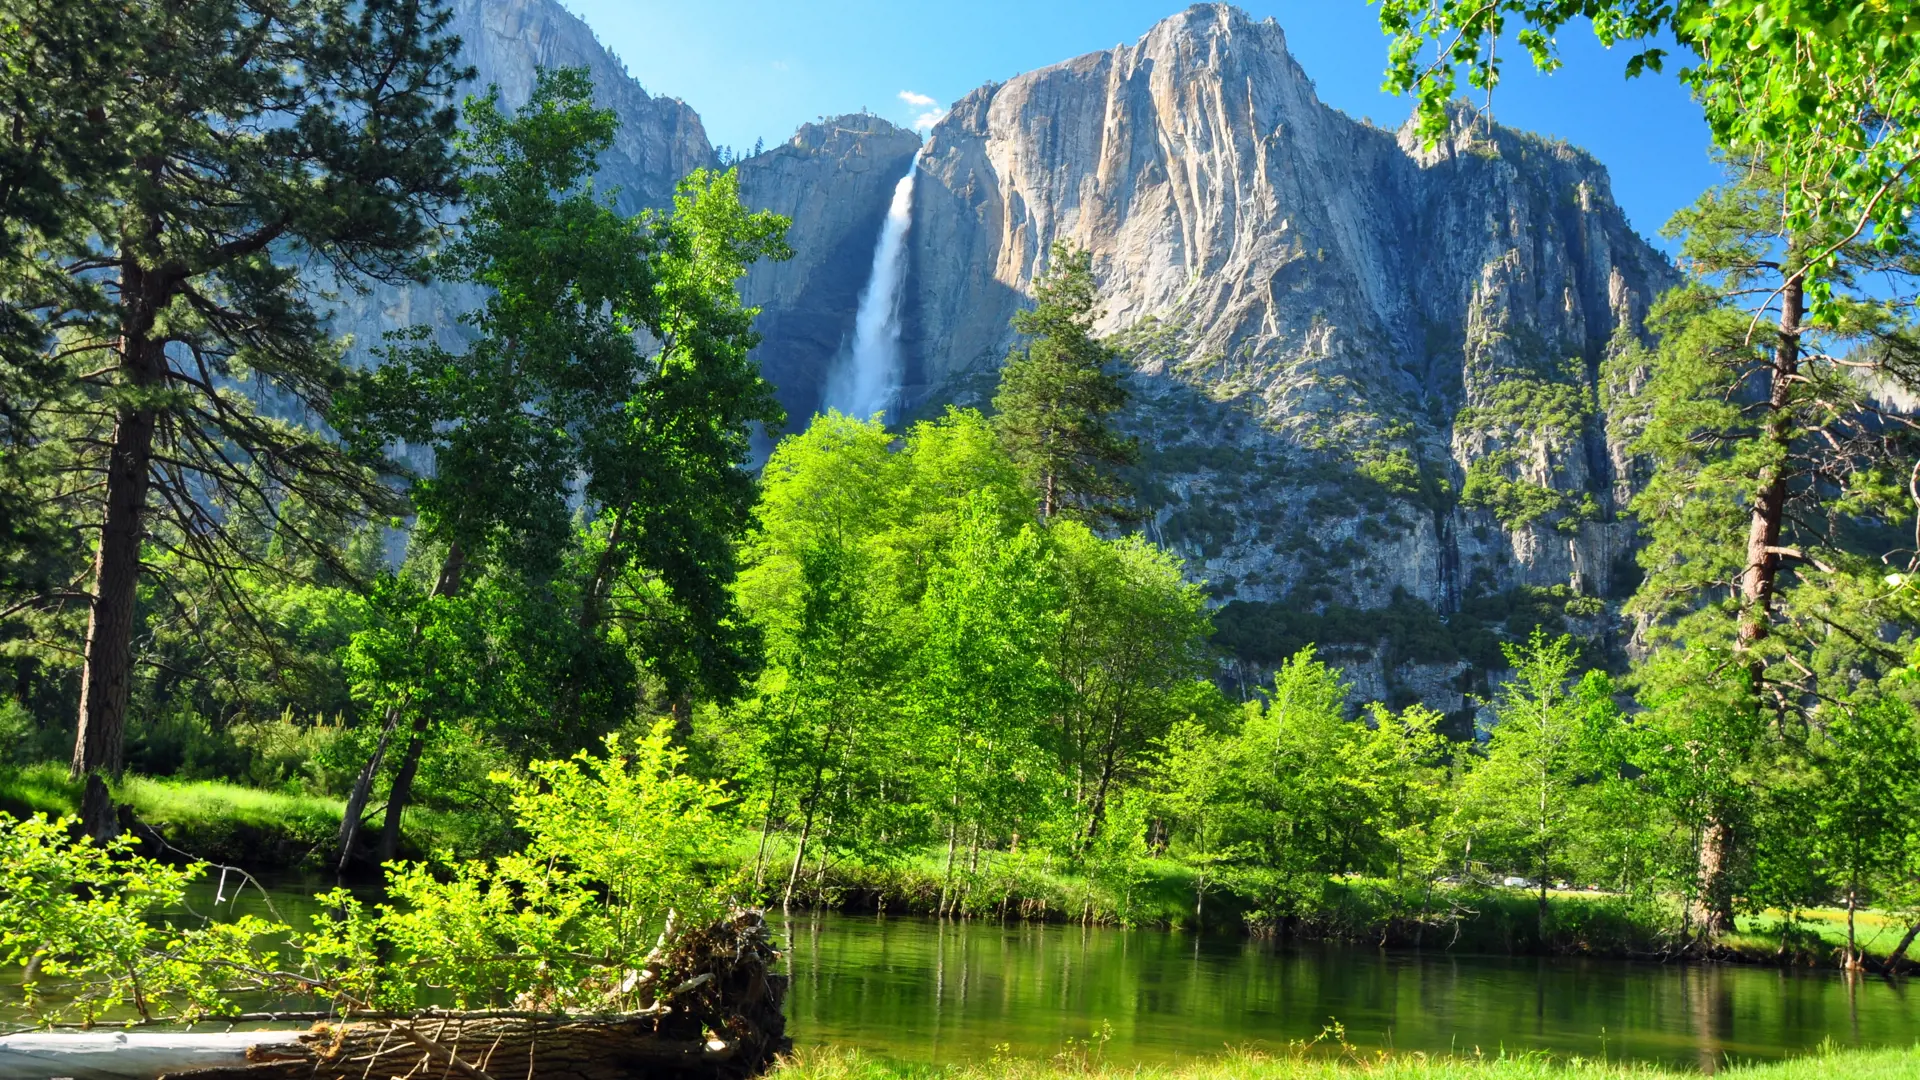 dag 7.2 USA_Upper Yosemite Falls Yosemite National Park California_56441893.jpg